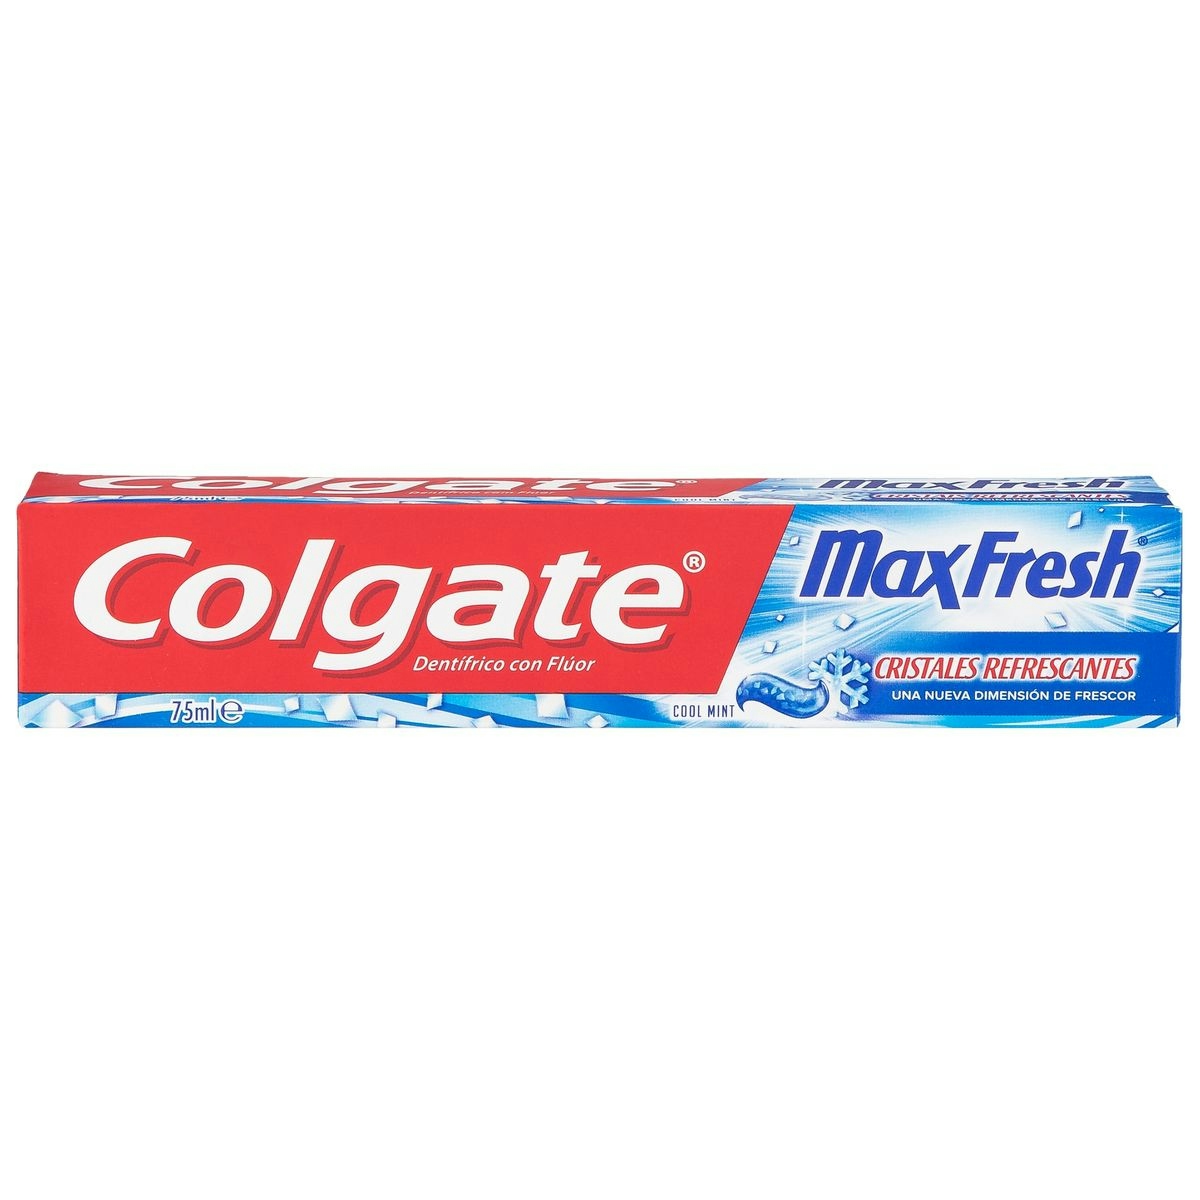 Pasta dentífrica COLGATE max fresh cristales refrescantes 75 ml